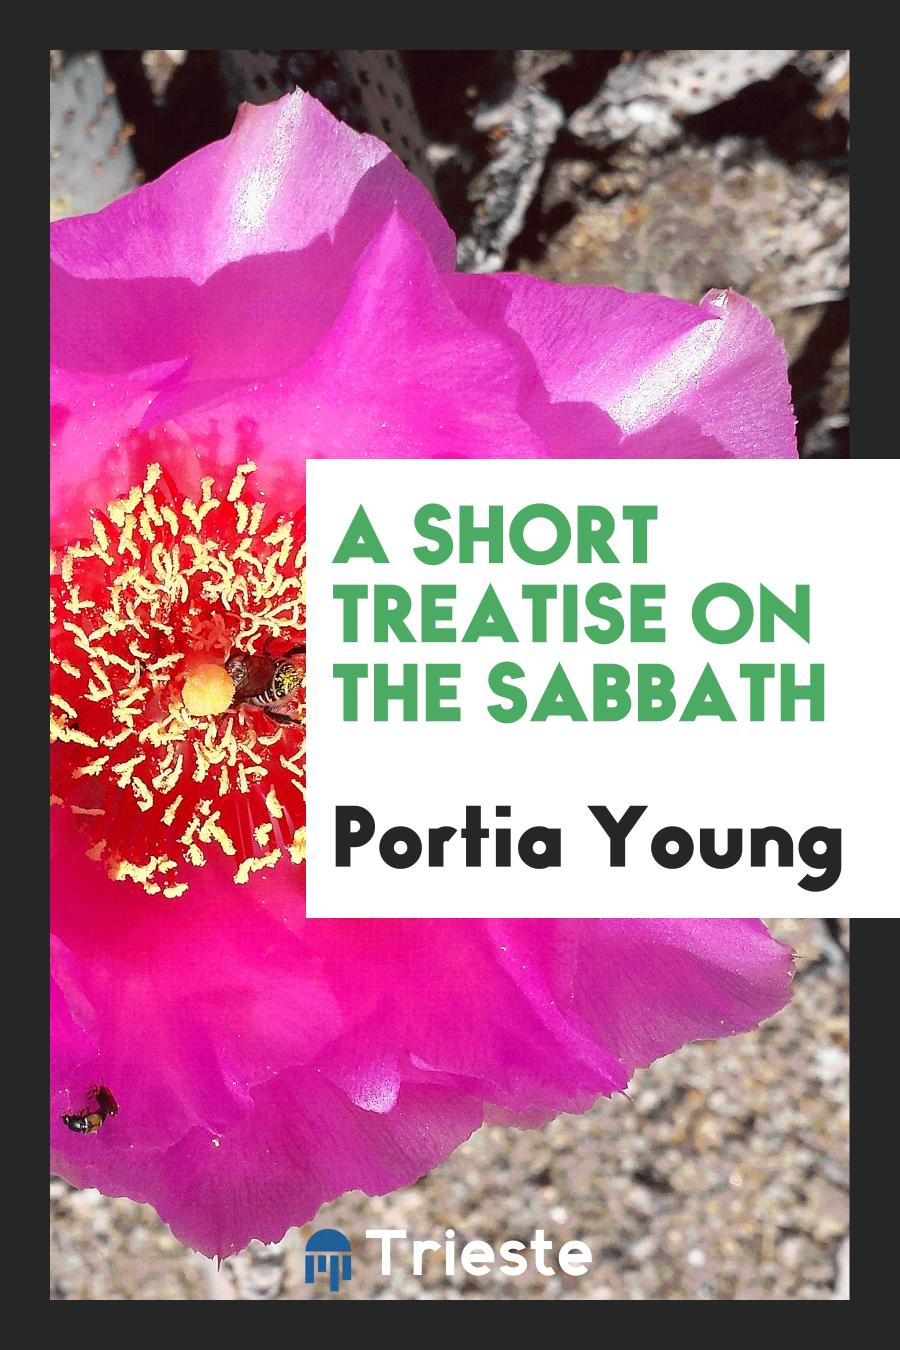 A short treatise on the sabbath